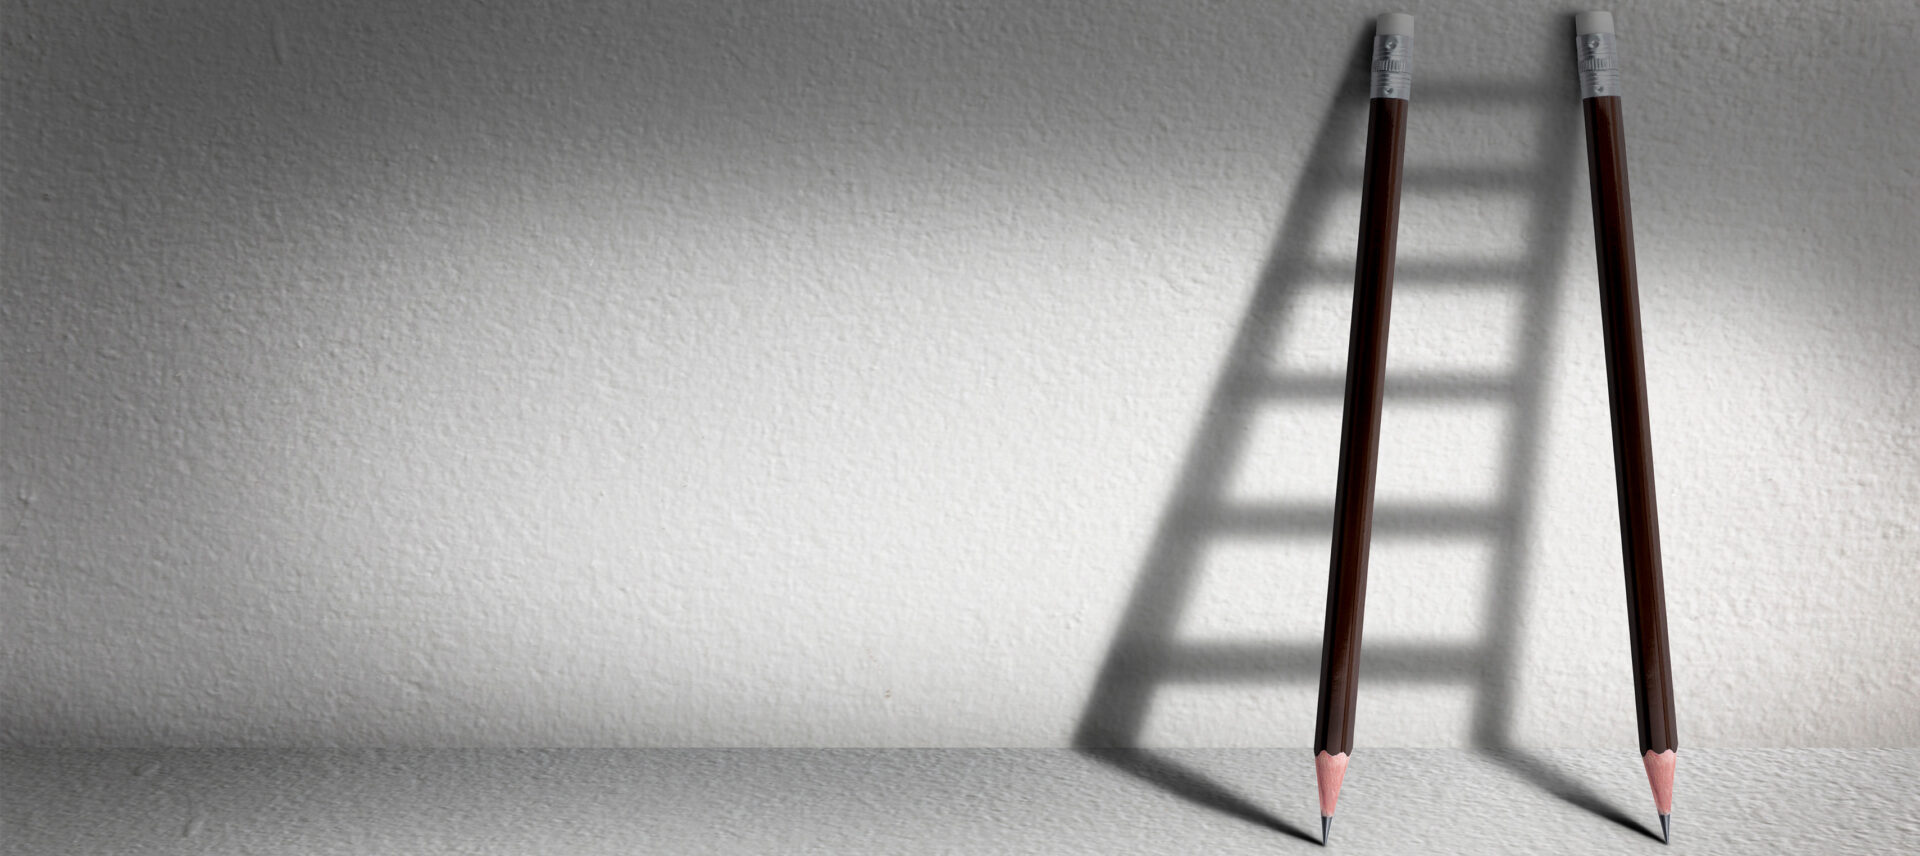 2 pencils against a wall throwing a ladder shadow